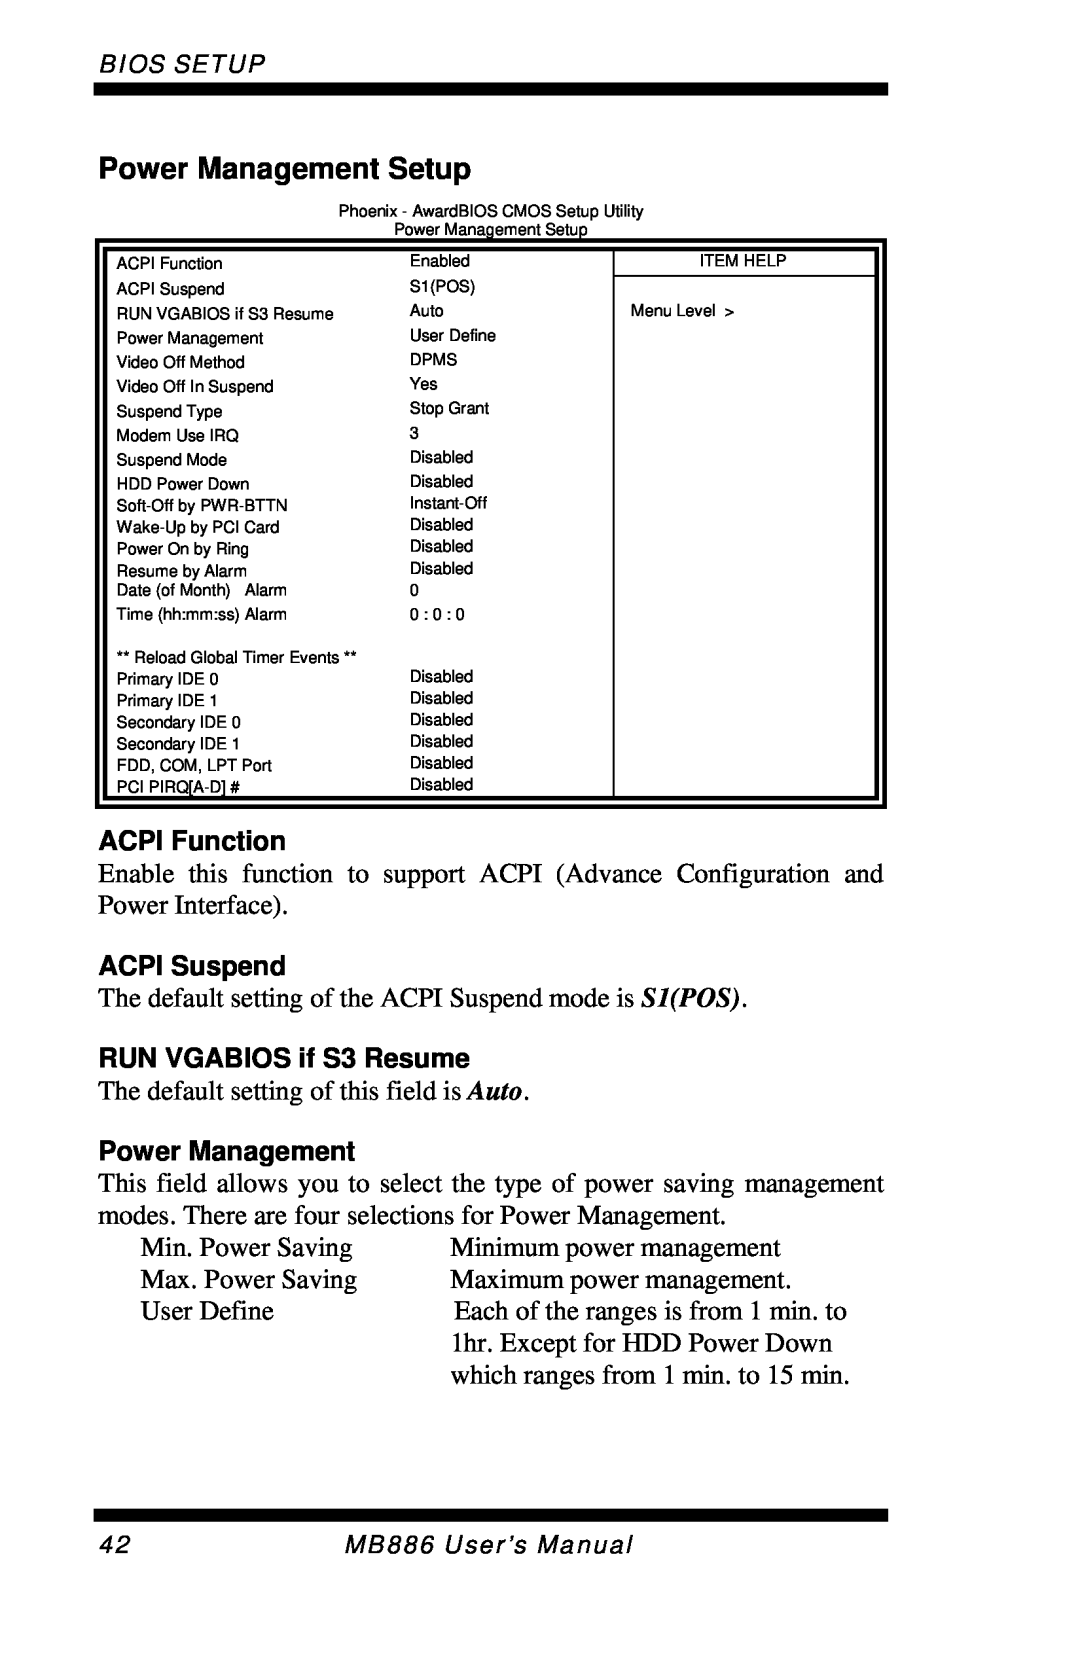 Intel MB886 user manual Power Management Setup, ACPI Function, ACPI Suspend, RUN VGABIOS if S3 Resume 